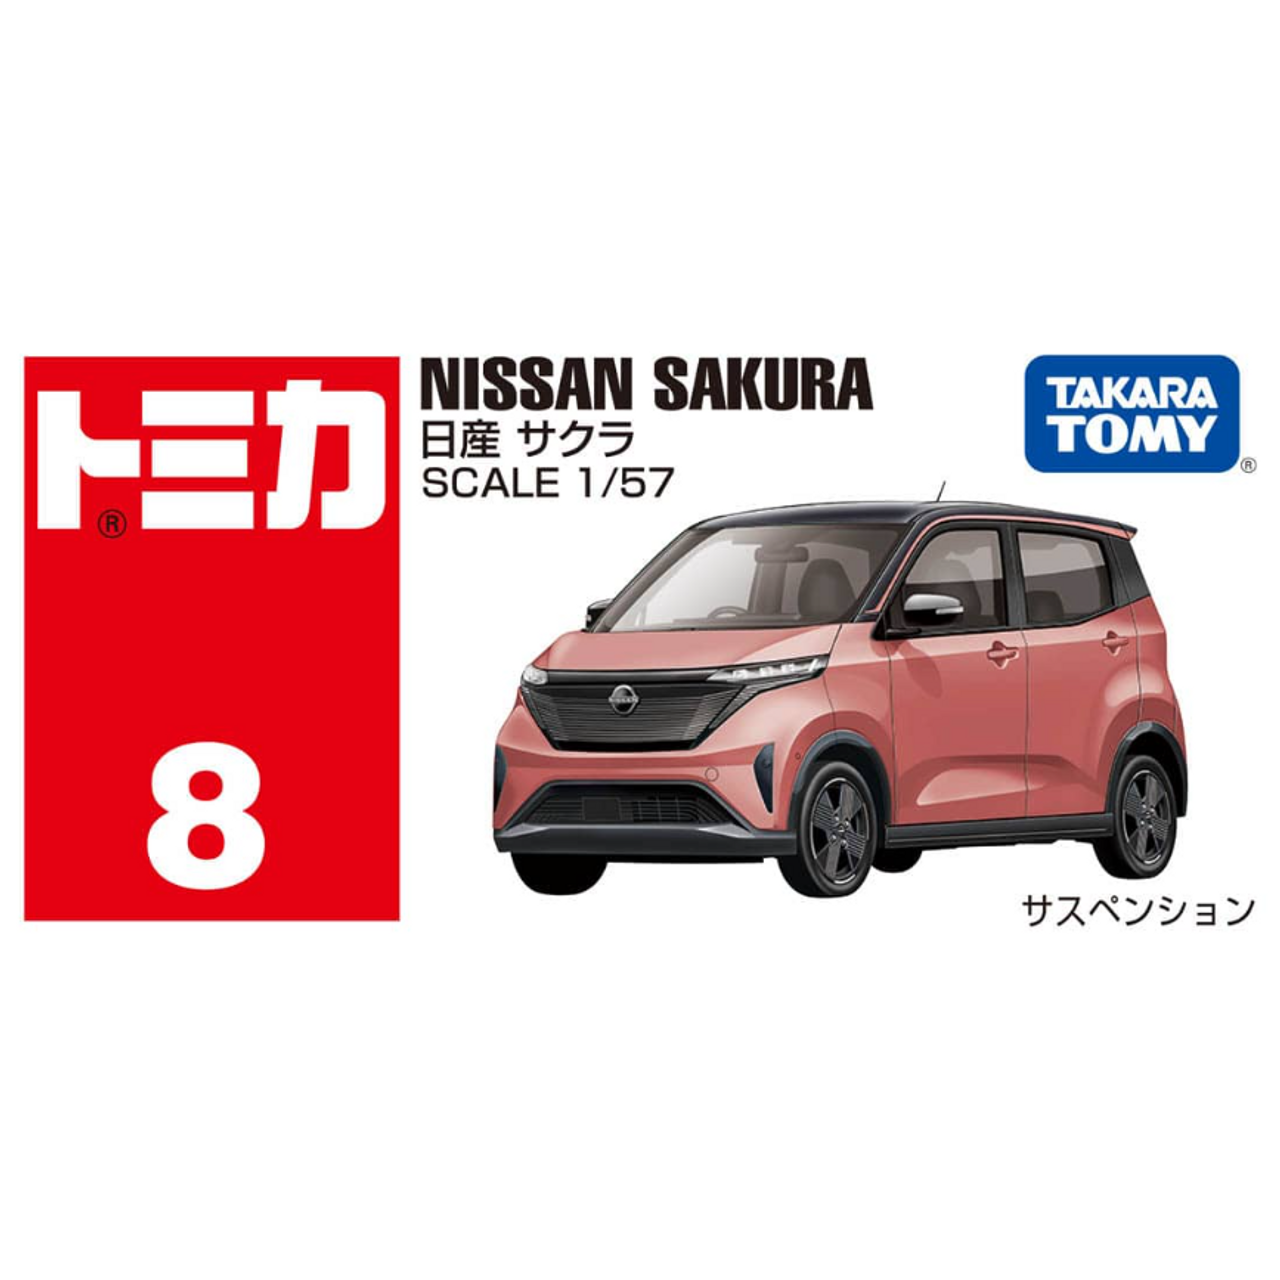 Tomica No.8 Nissan Sakura Box